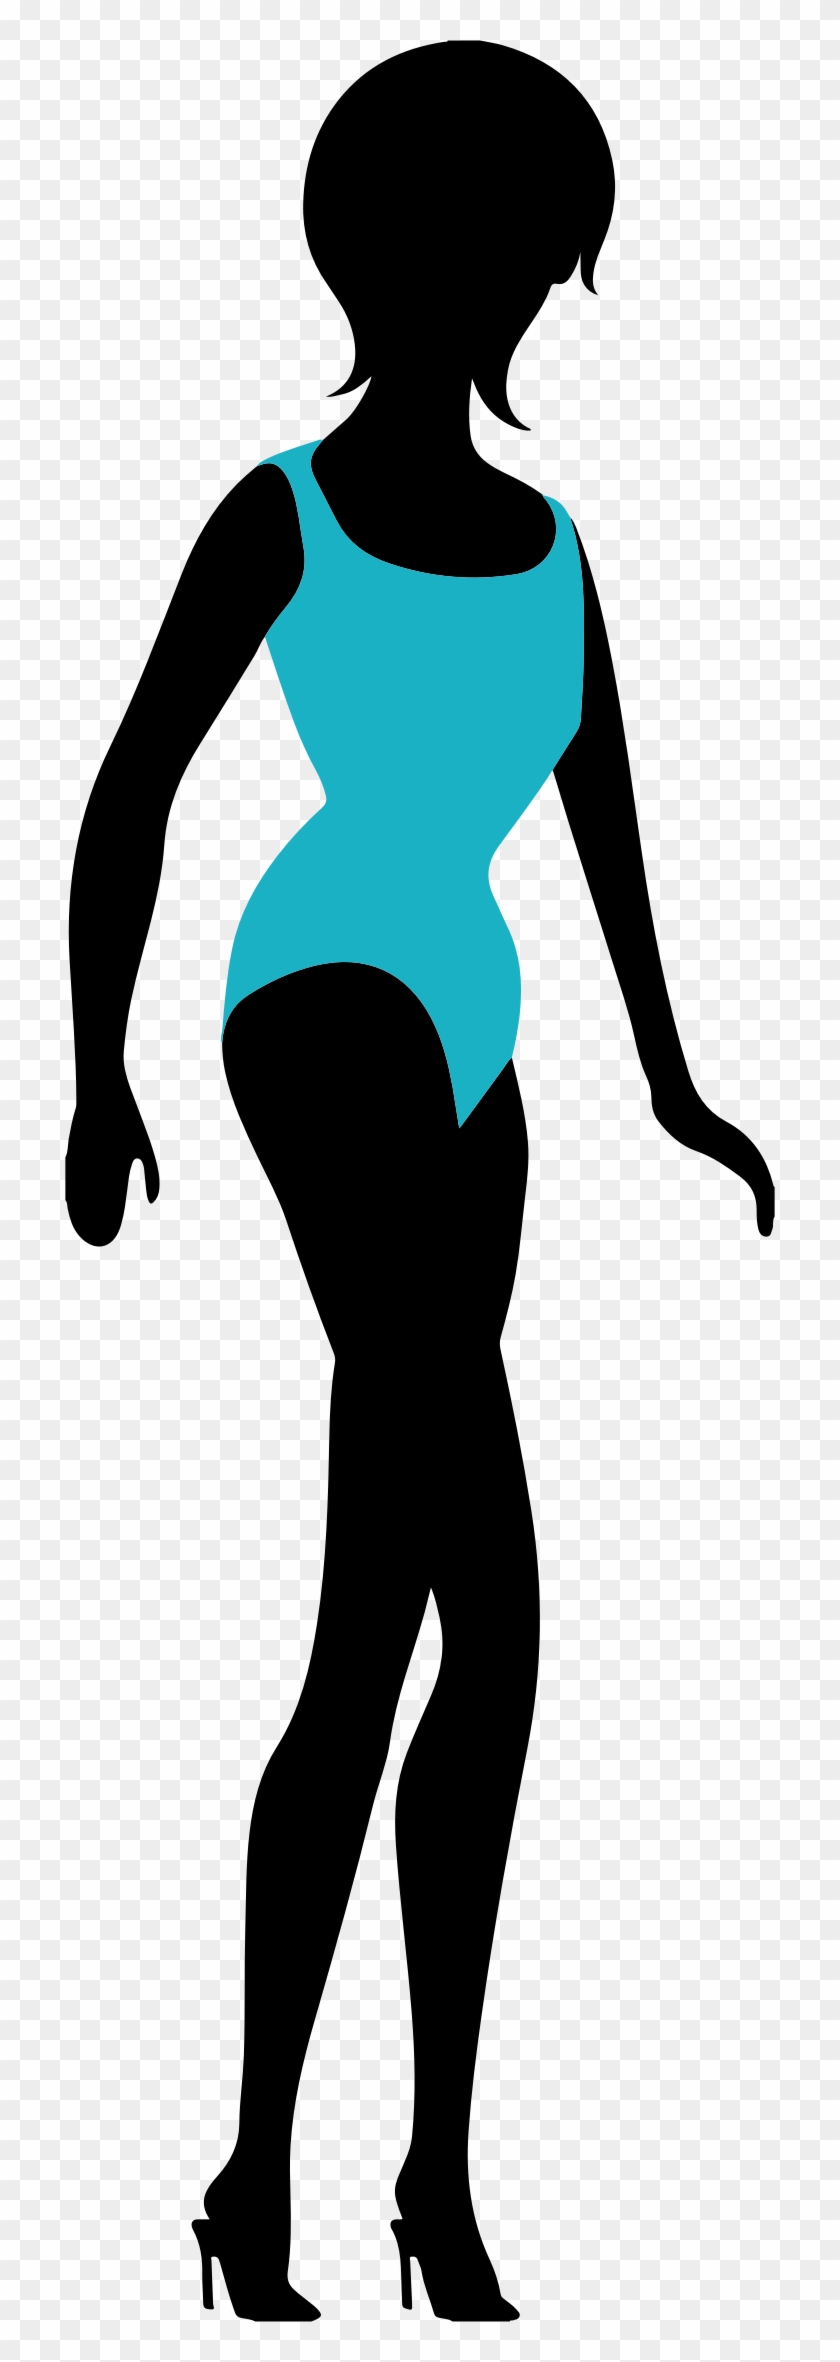 Clipart Woman In Bikini Silhouette - Bikini Woman Silhoutte Png #371356